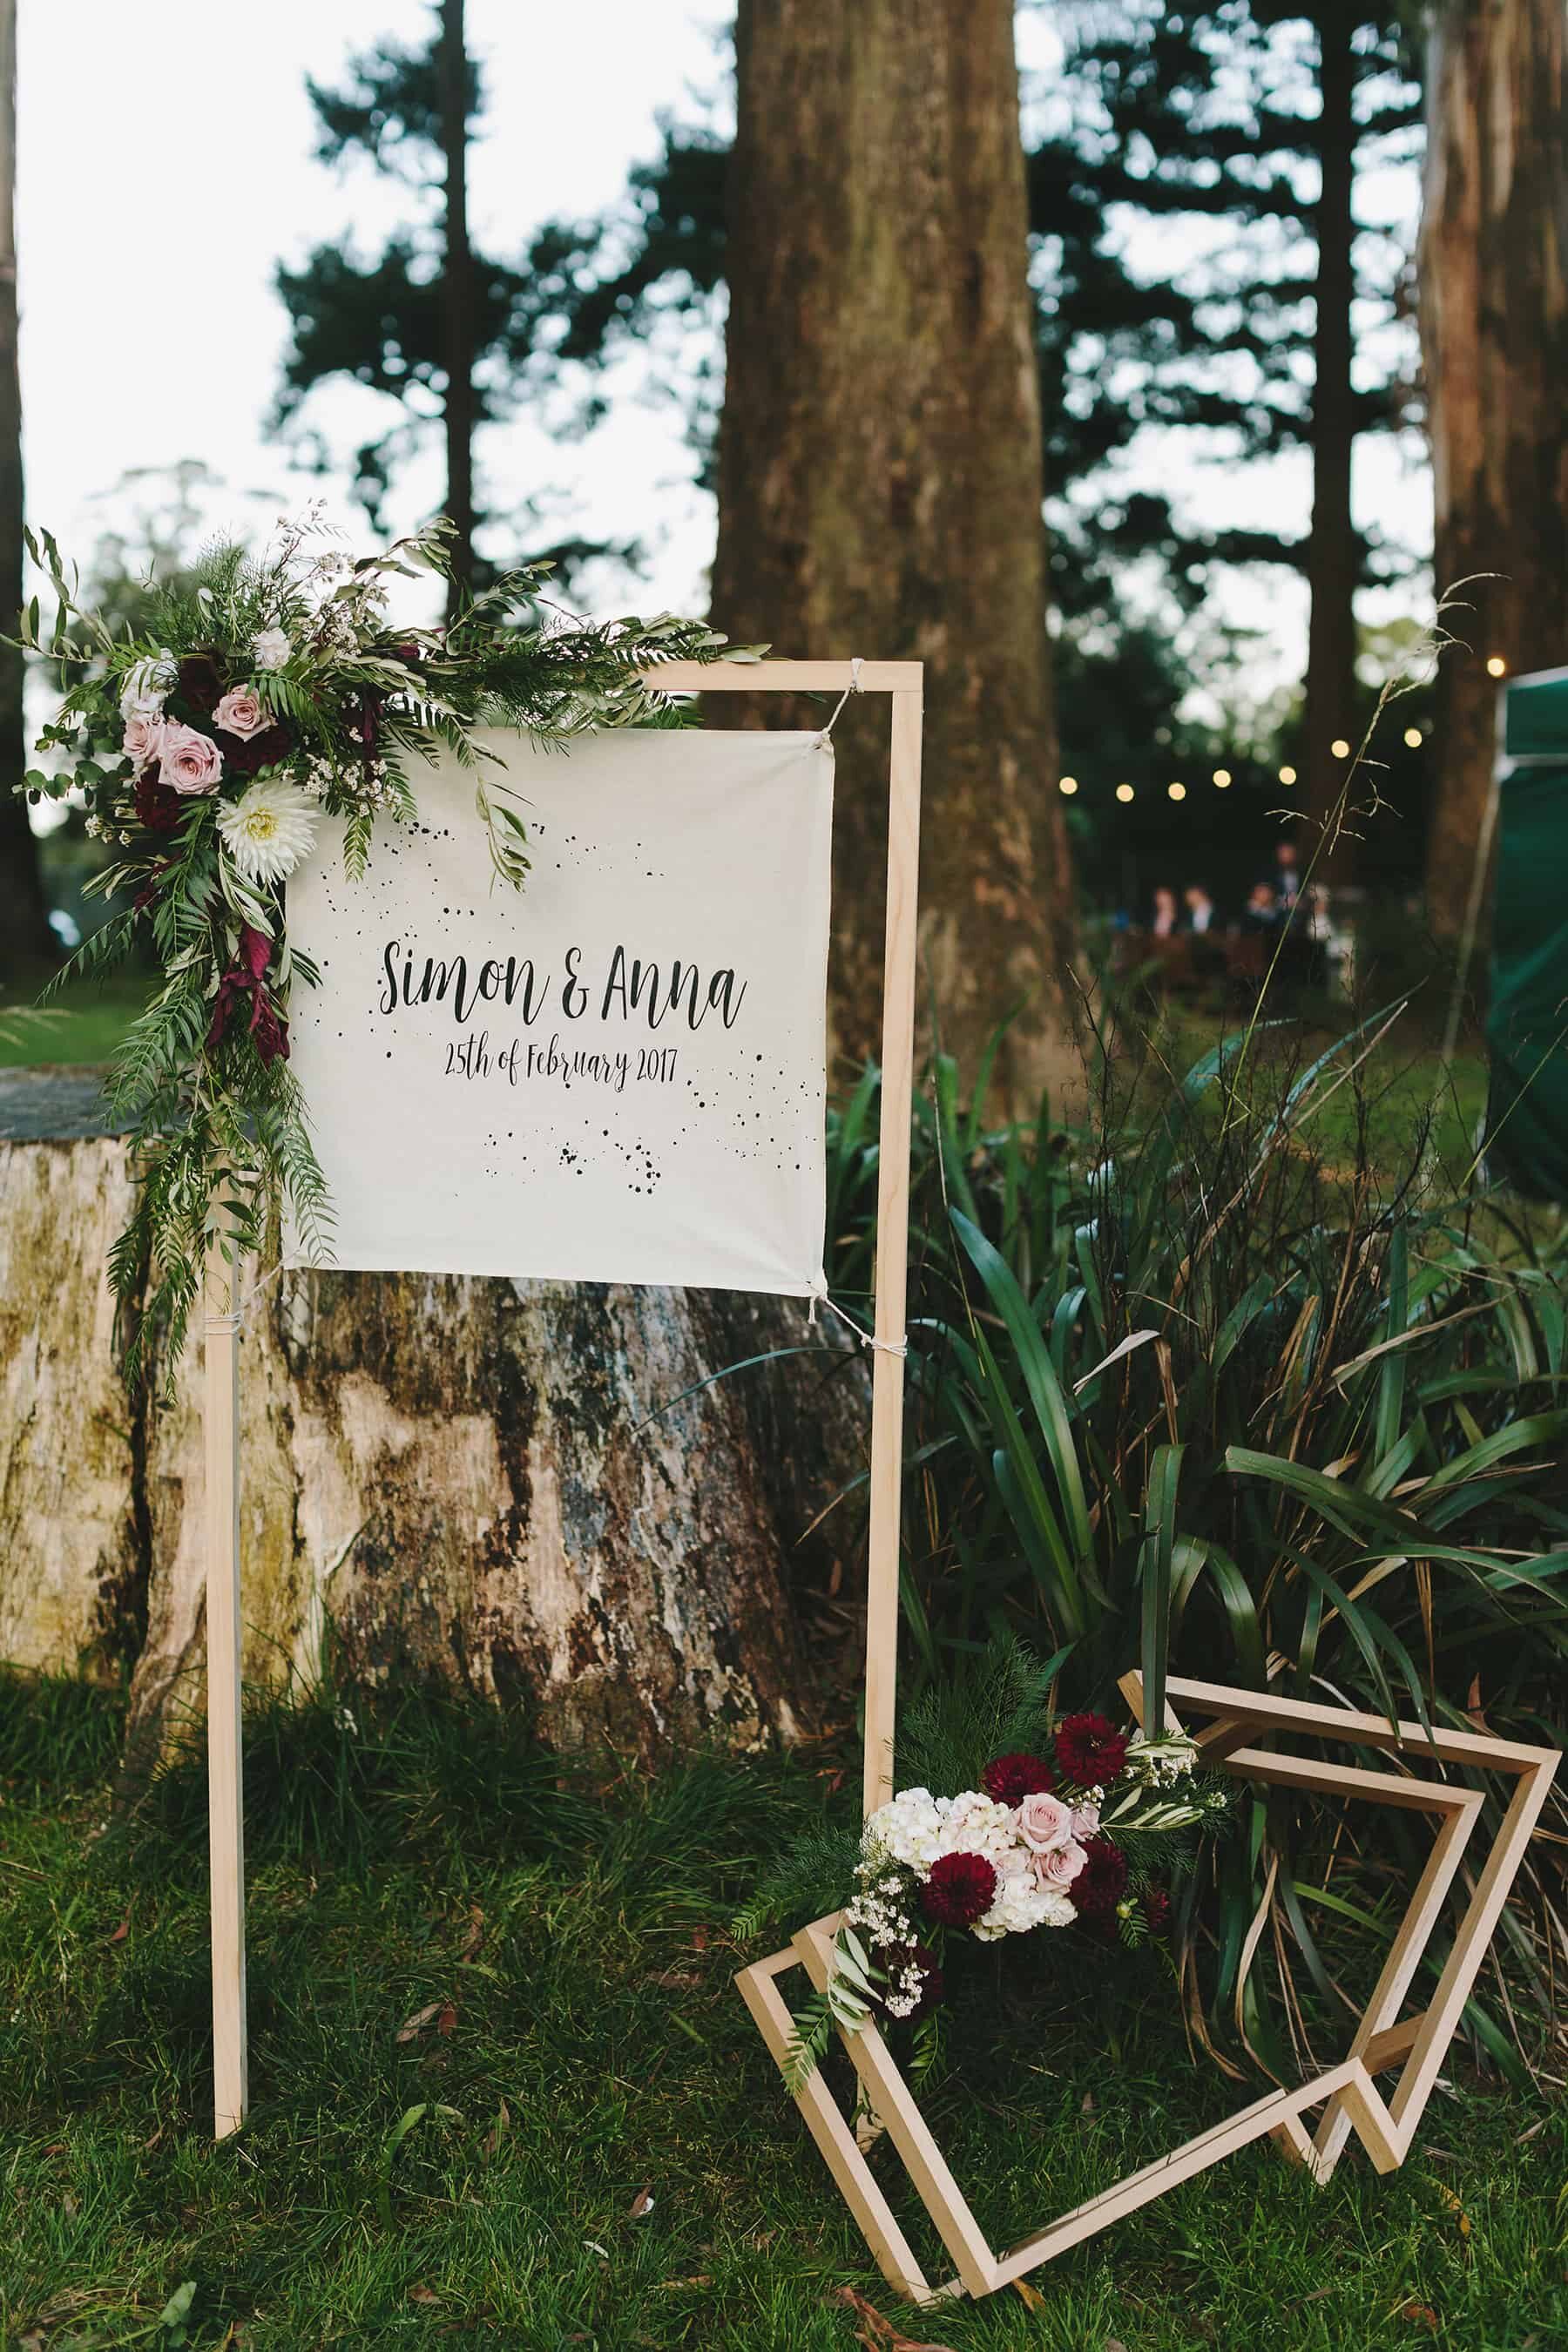 Fun floral wedding signage with timber arrow